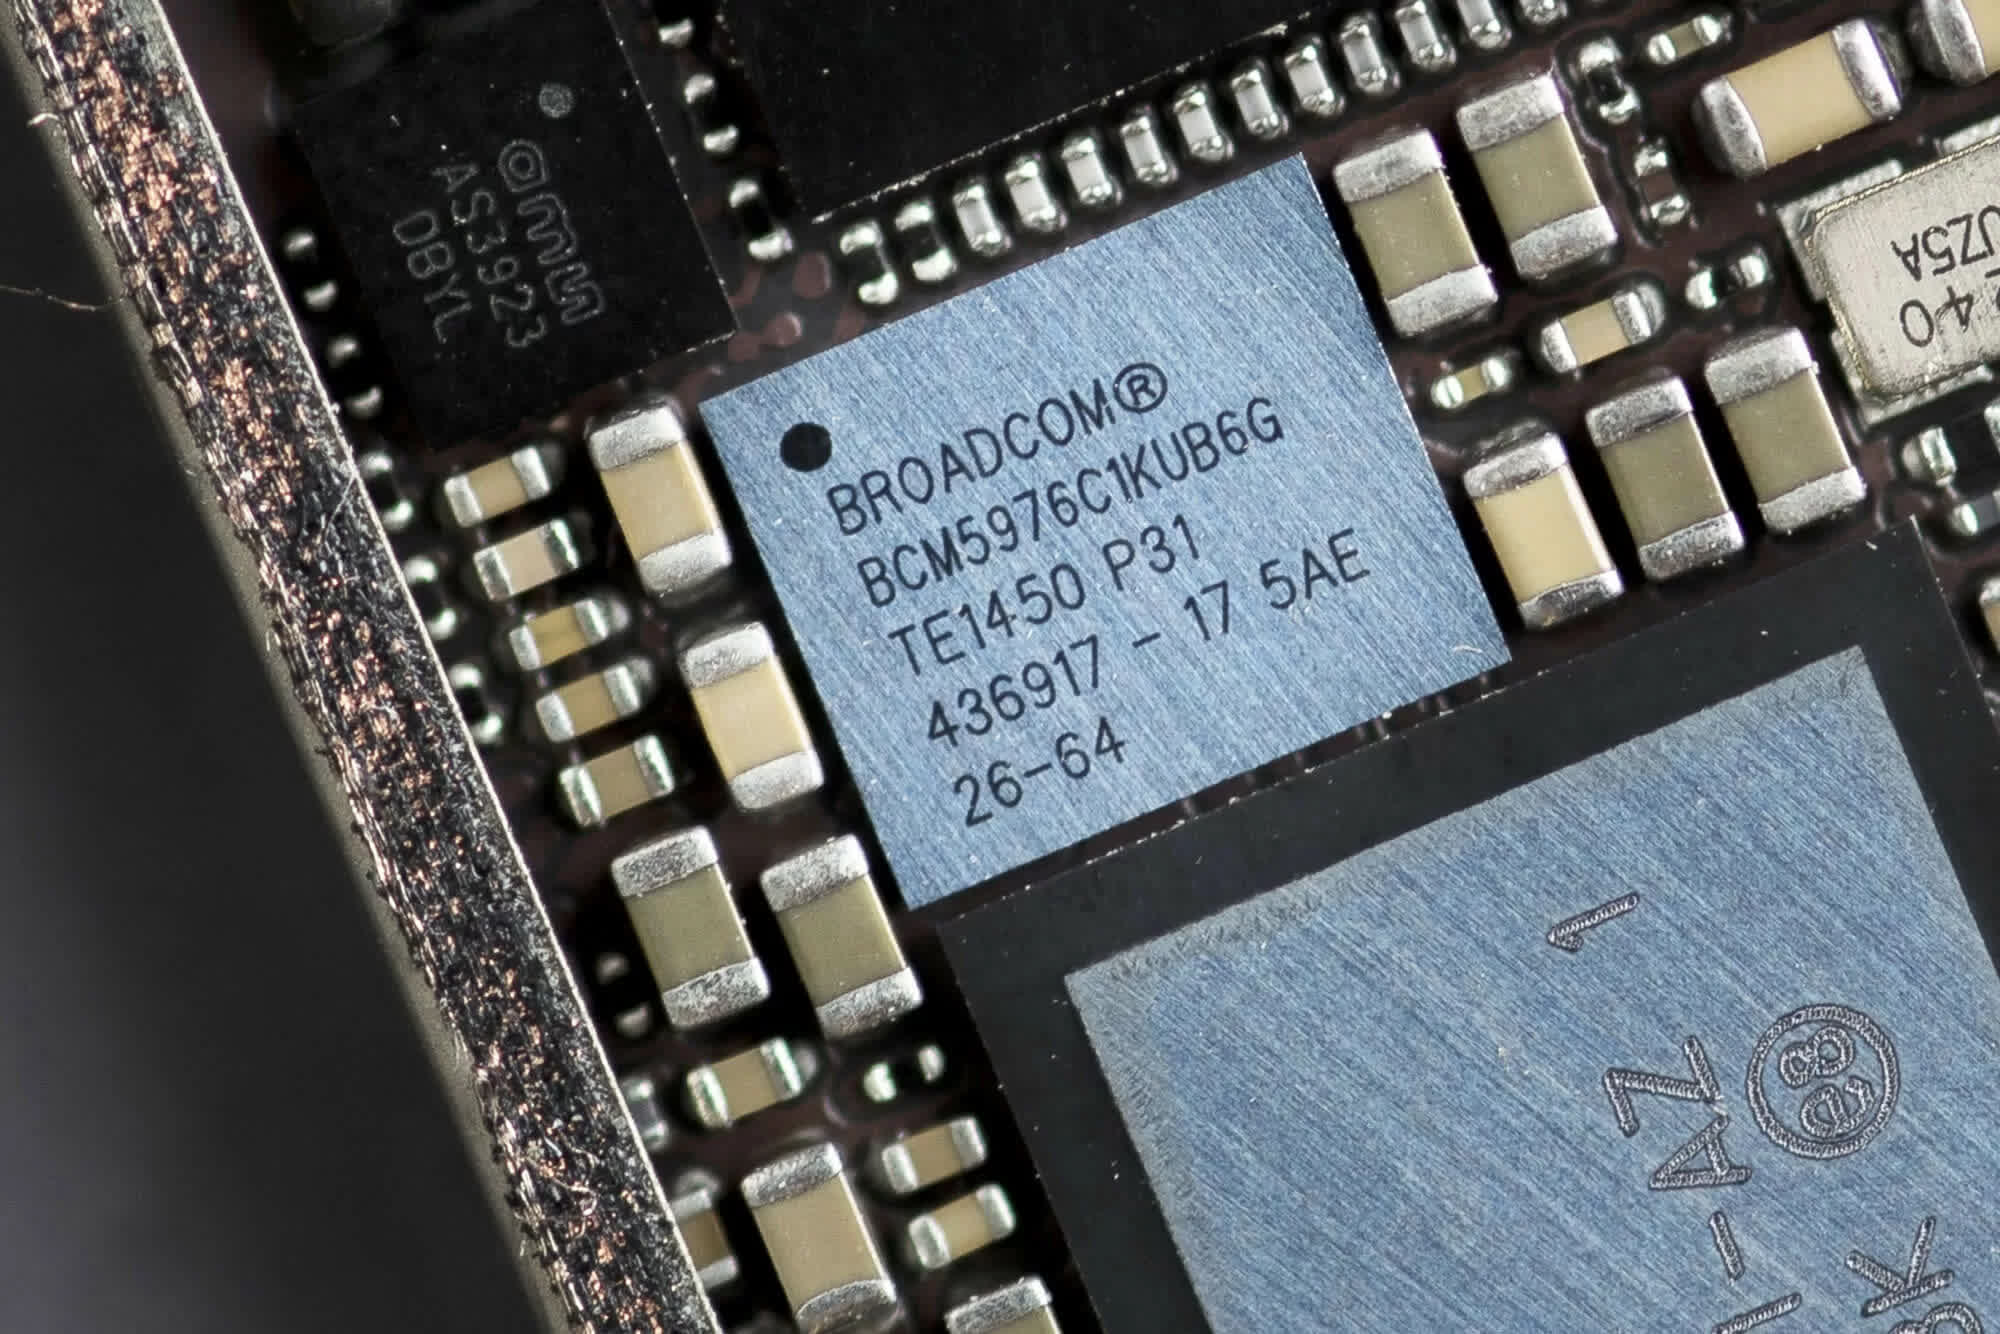 Chipmaker Avago Technologies acquires rival Broadcom for $37 billion